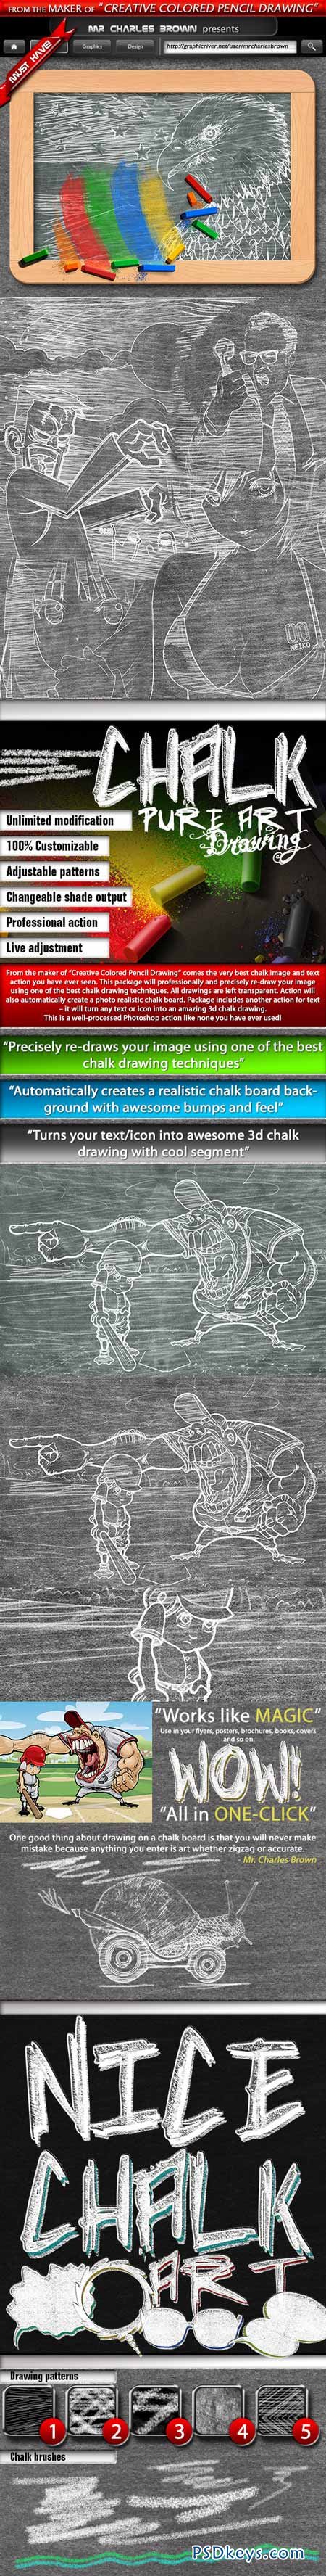 Pure Art Chalk Drawing 4024664